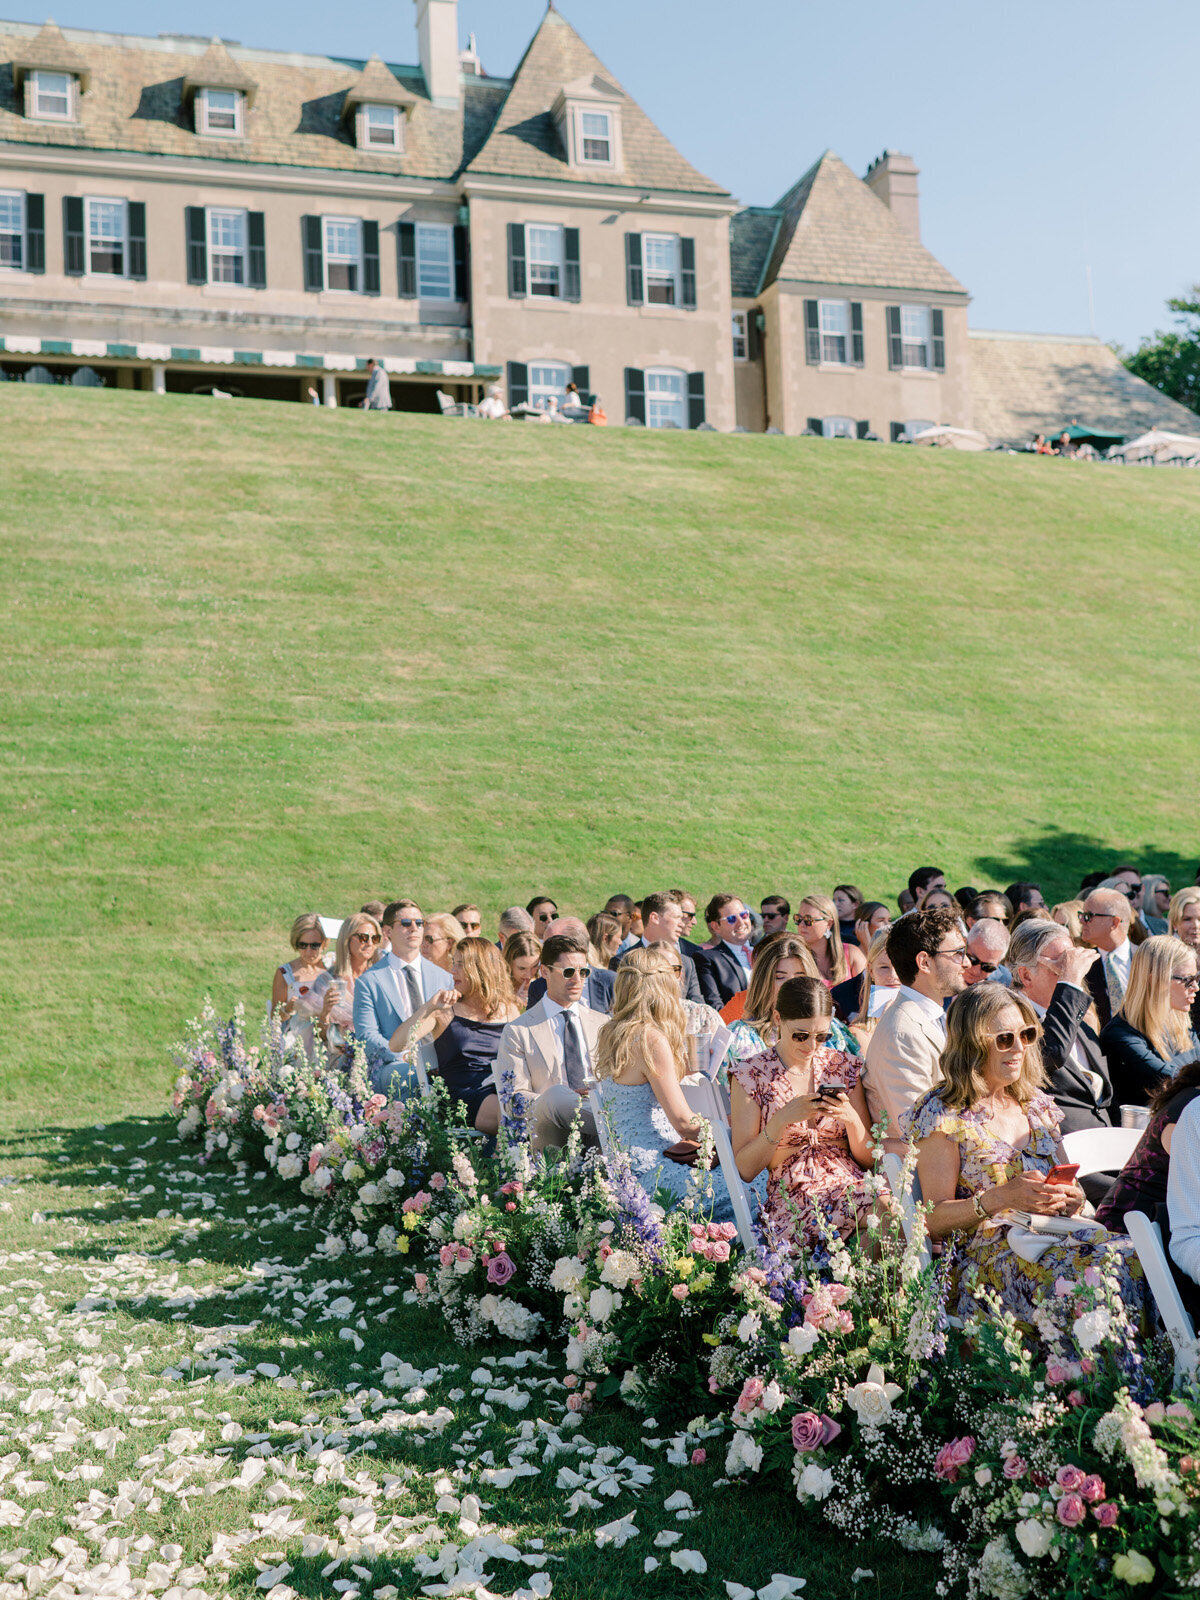 Kate-Murtaugh-Events-wedding-ceremony-aisle